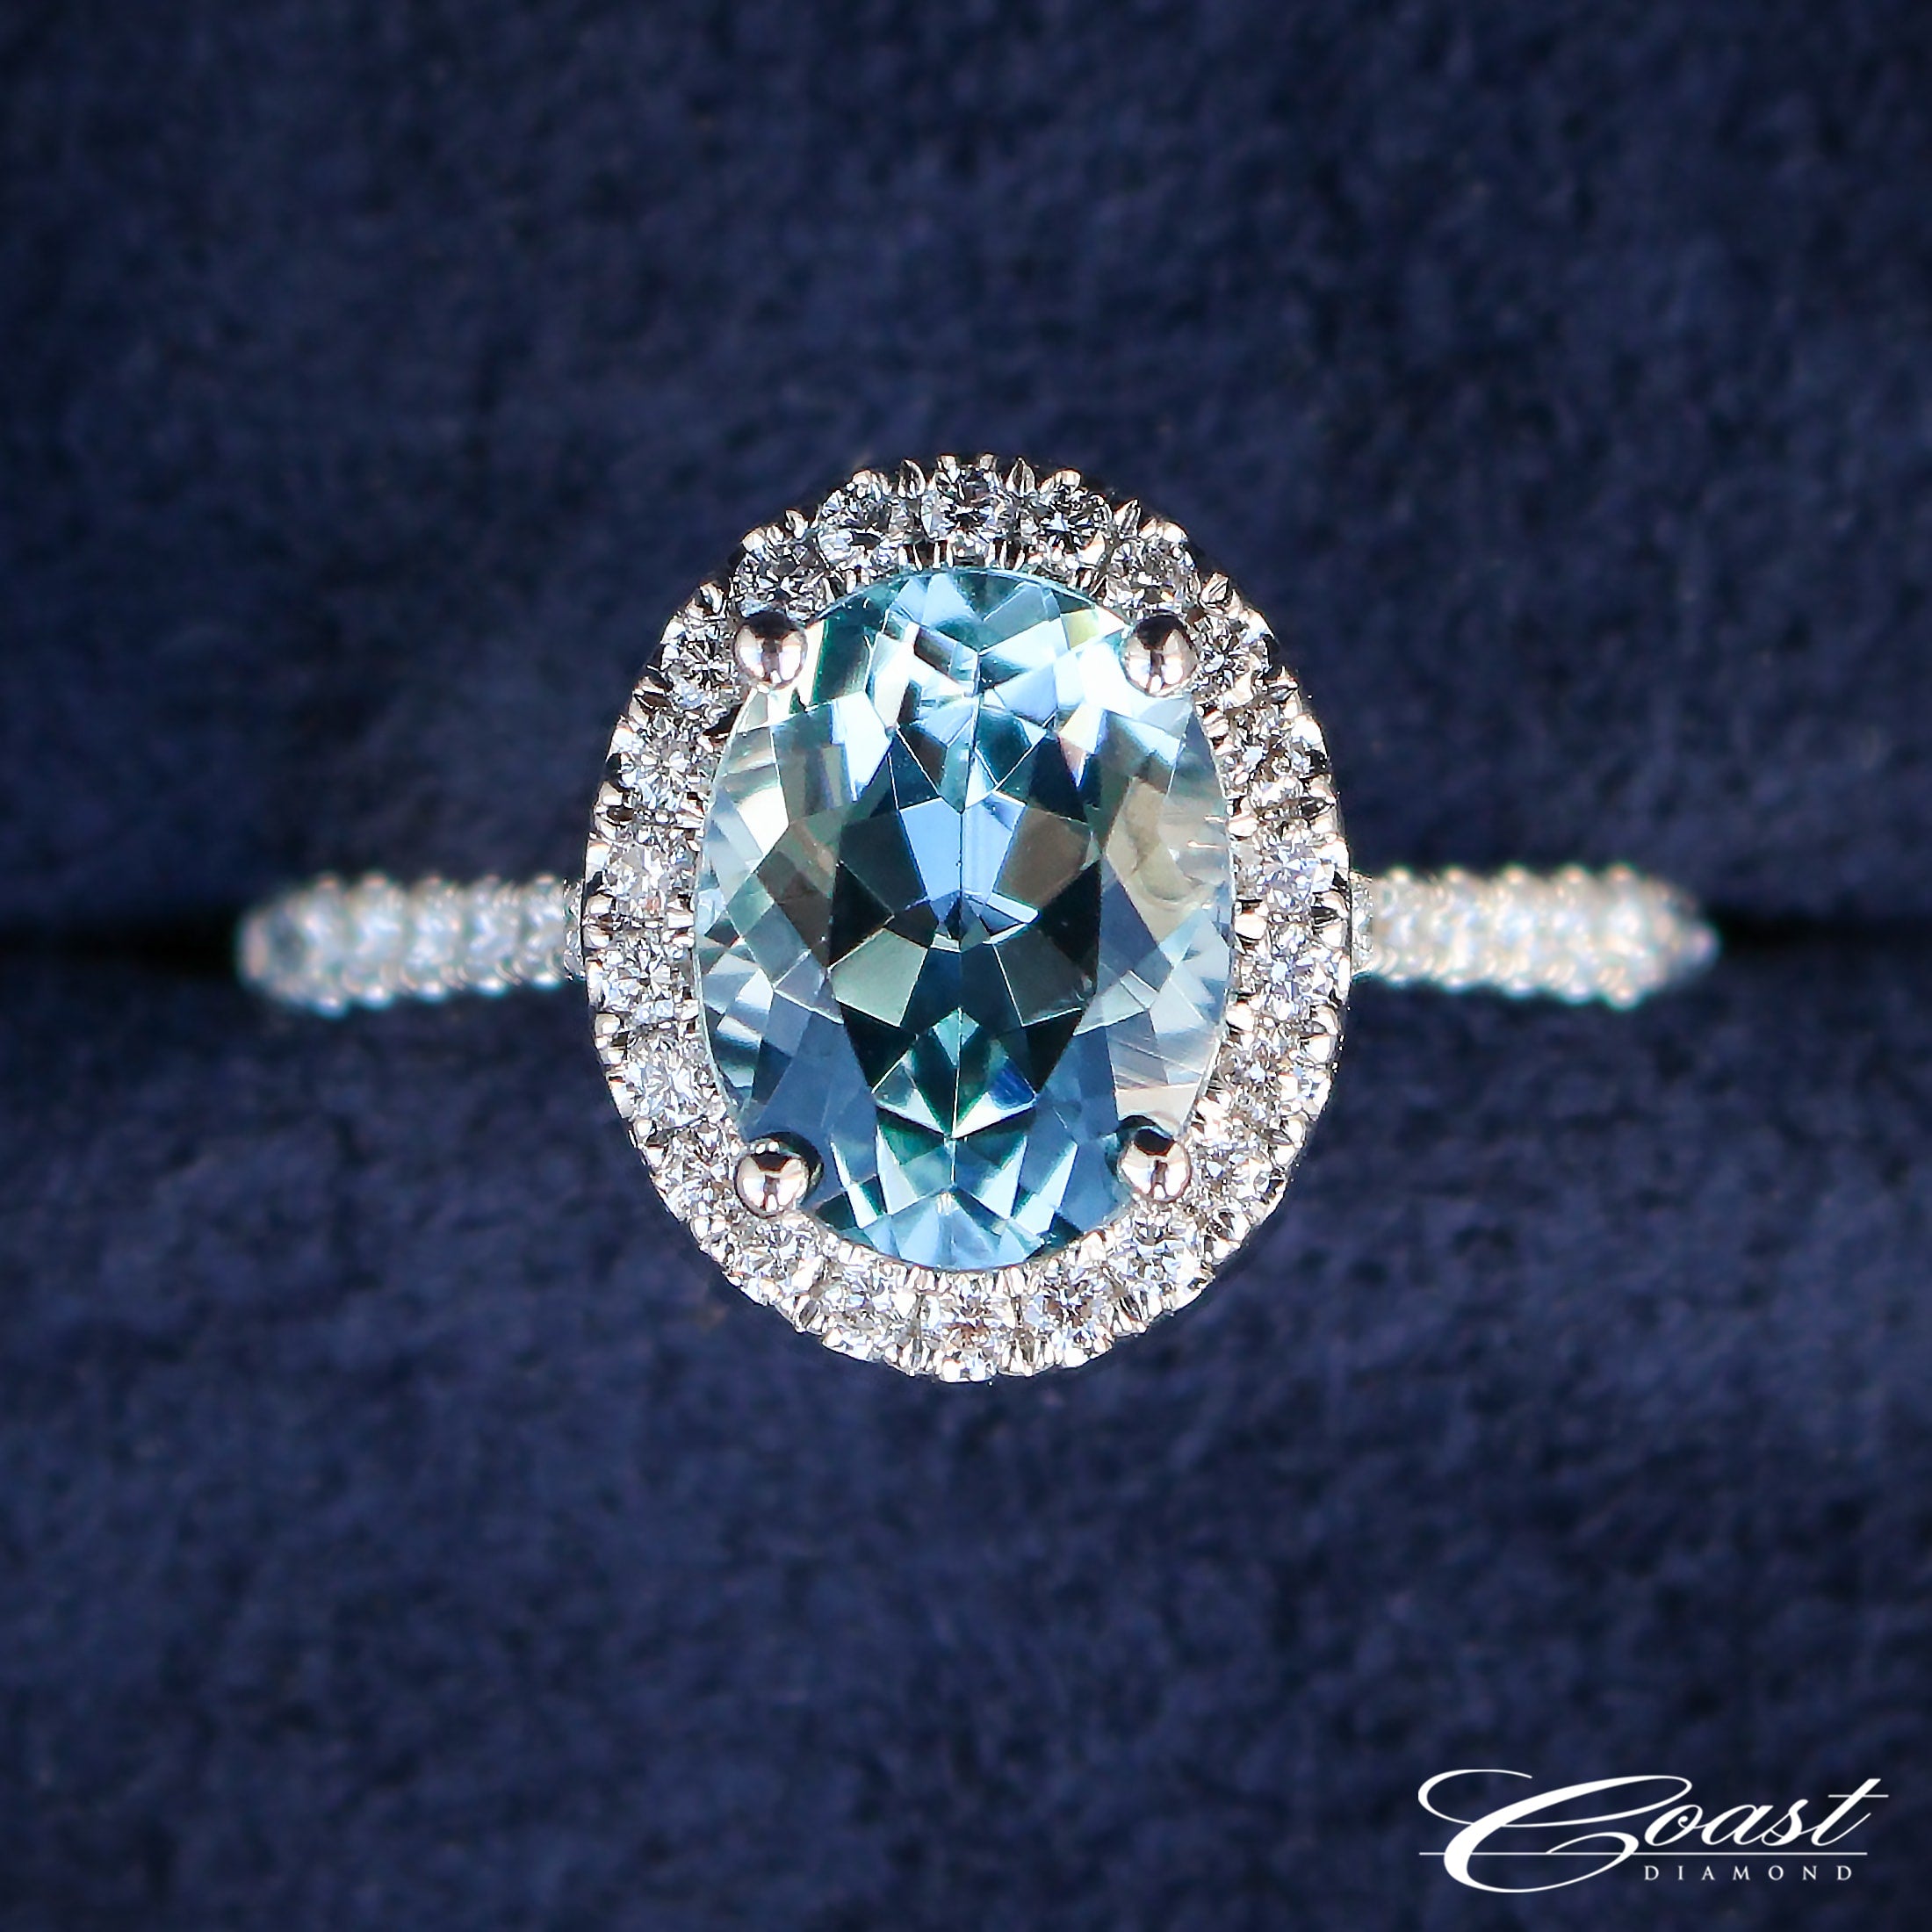 Oval cut aquamarine and diamond halo ring by Coast Diamond